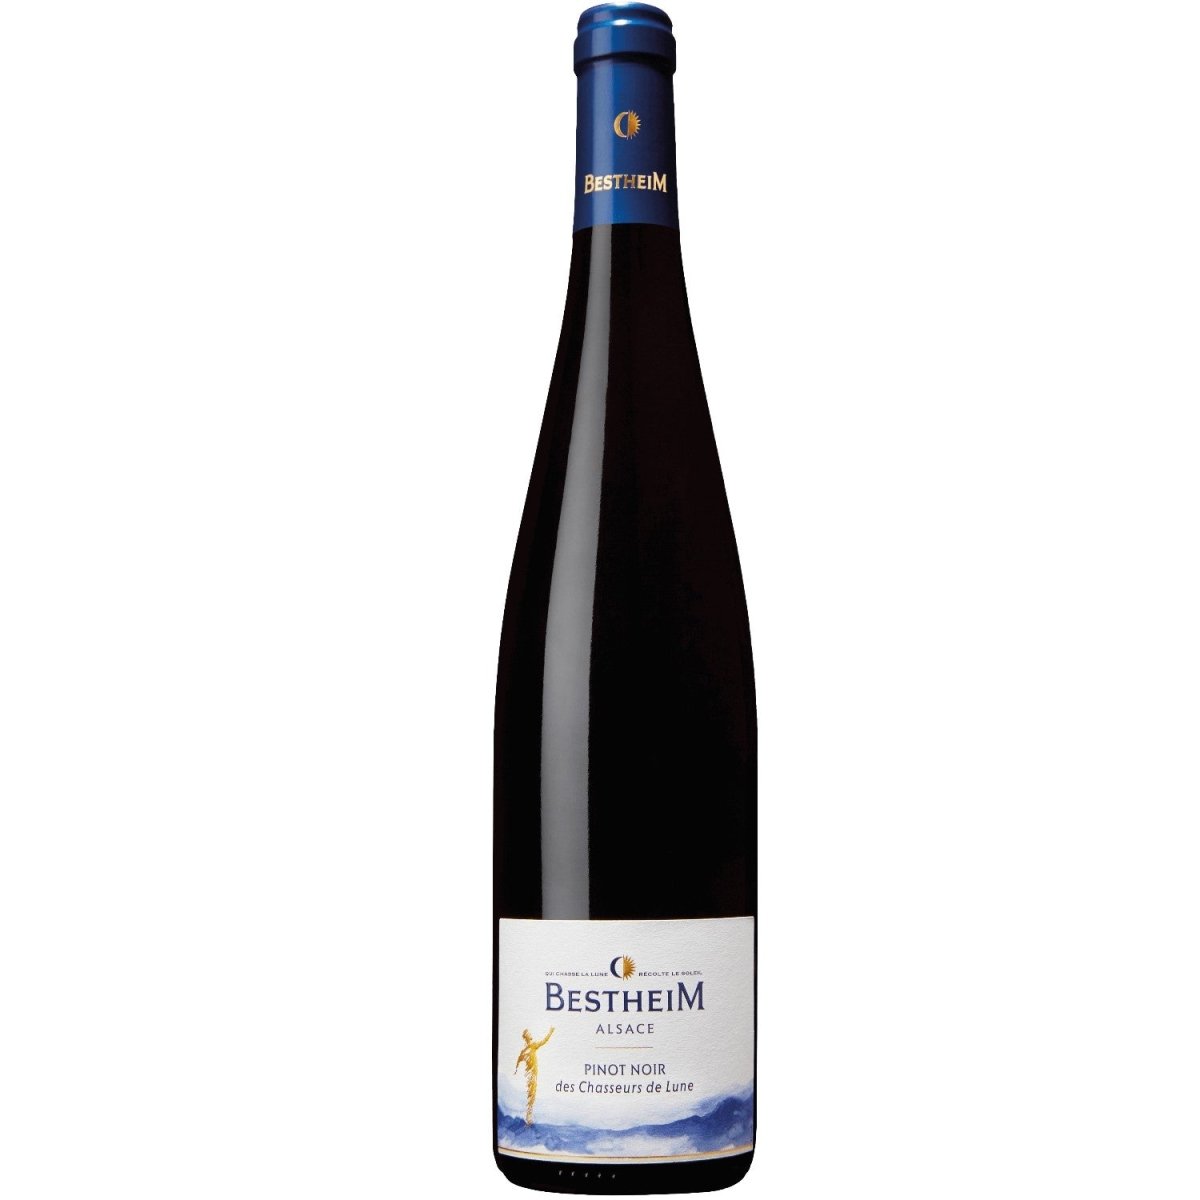 Bestheim Pinot Noir Classic Alsace AOC Rotwein Wein trocken Frankreich (3 x 0,75l) - Versanel -